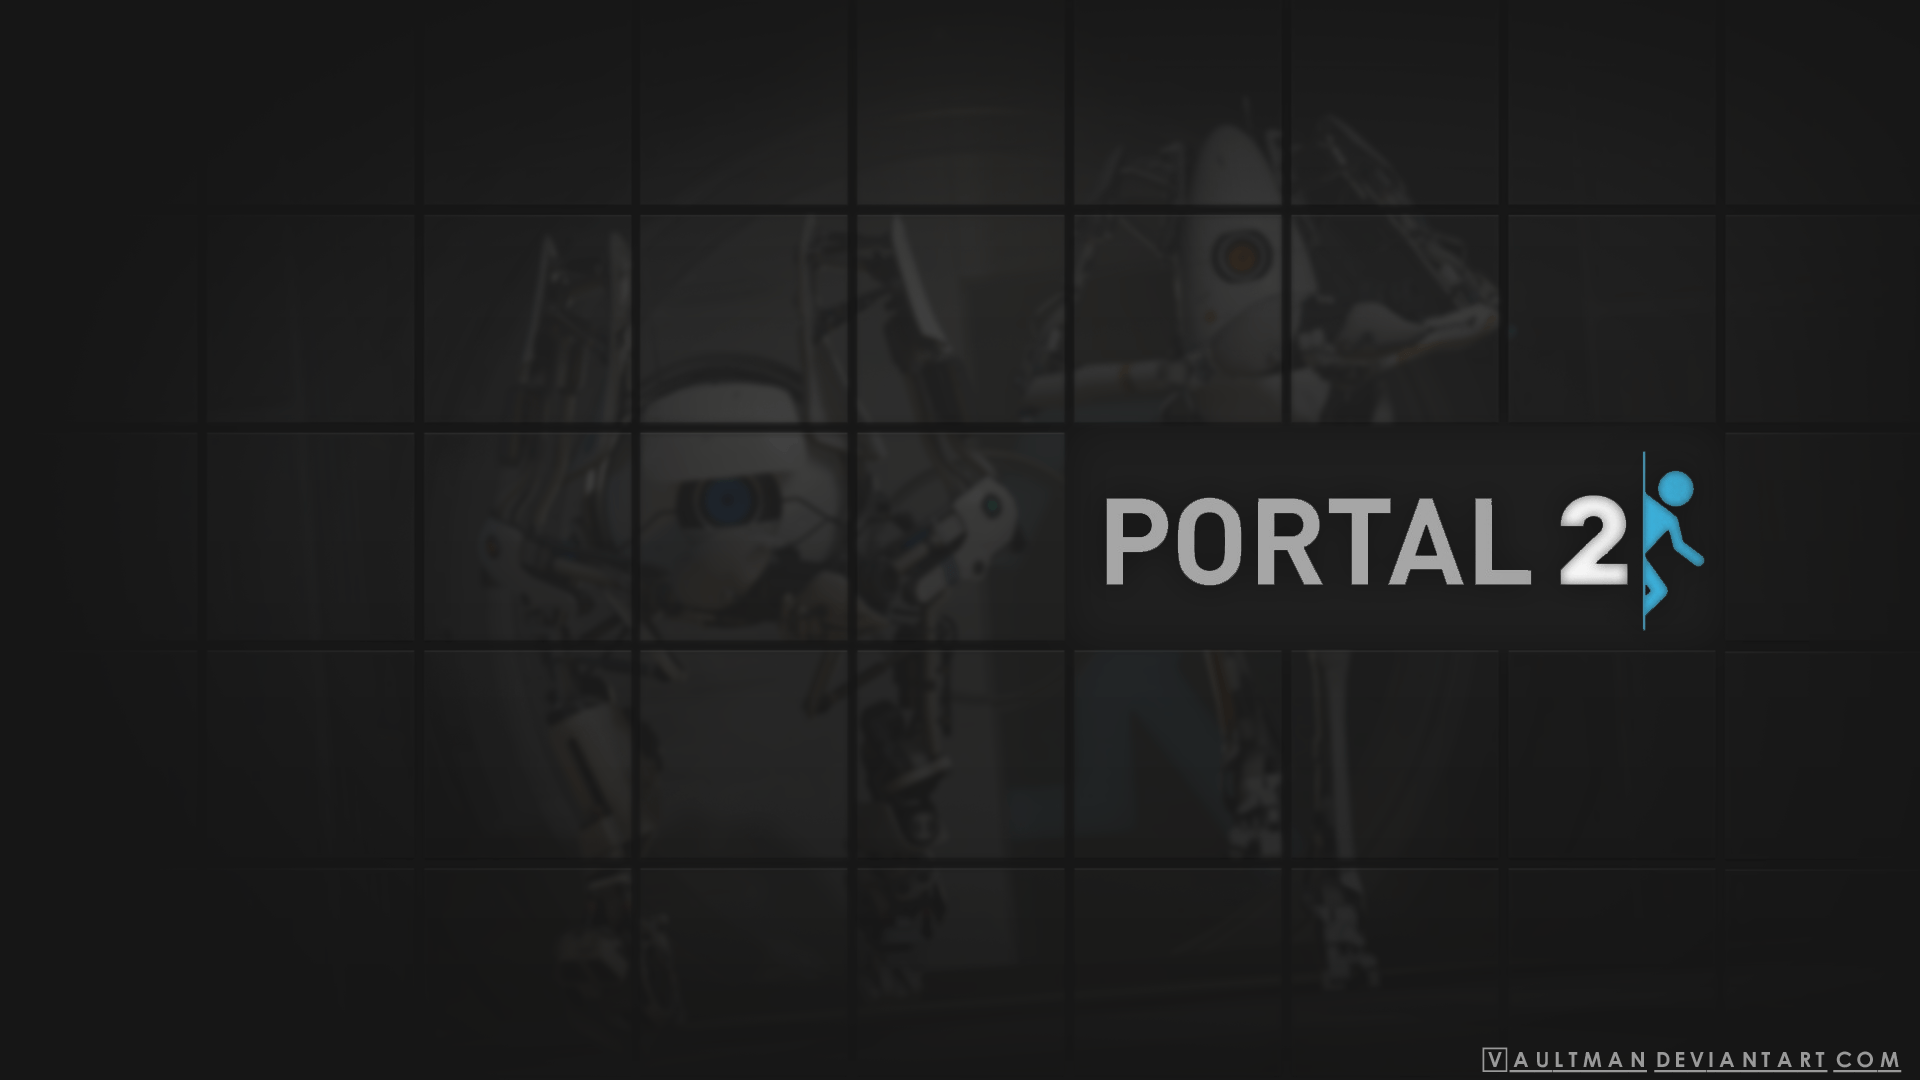 Portal Full HD 1920x1080 Wallpaper Free Downlo HD Game